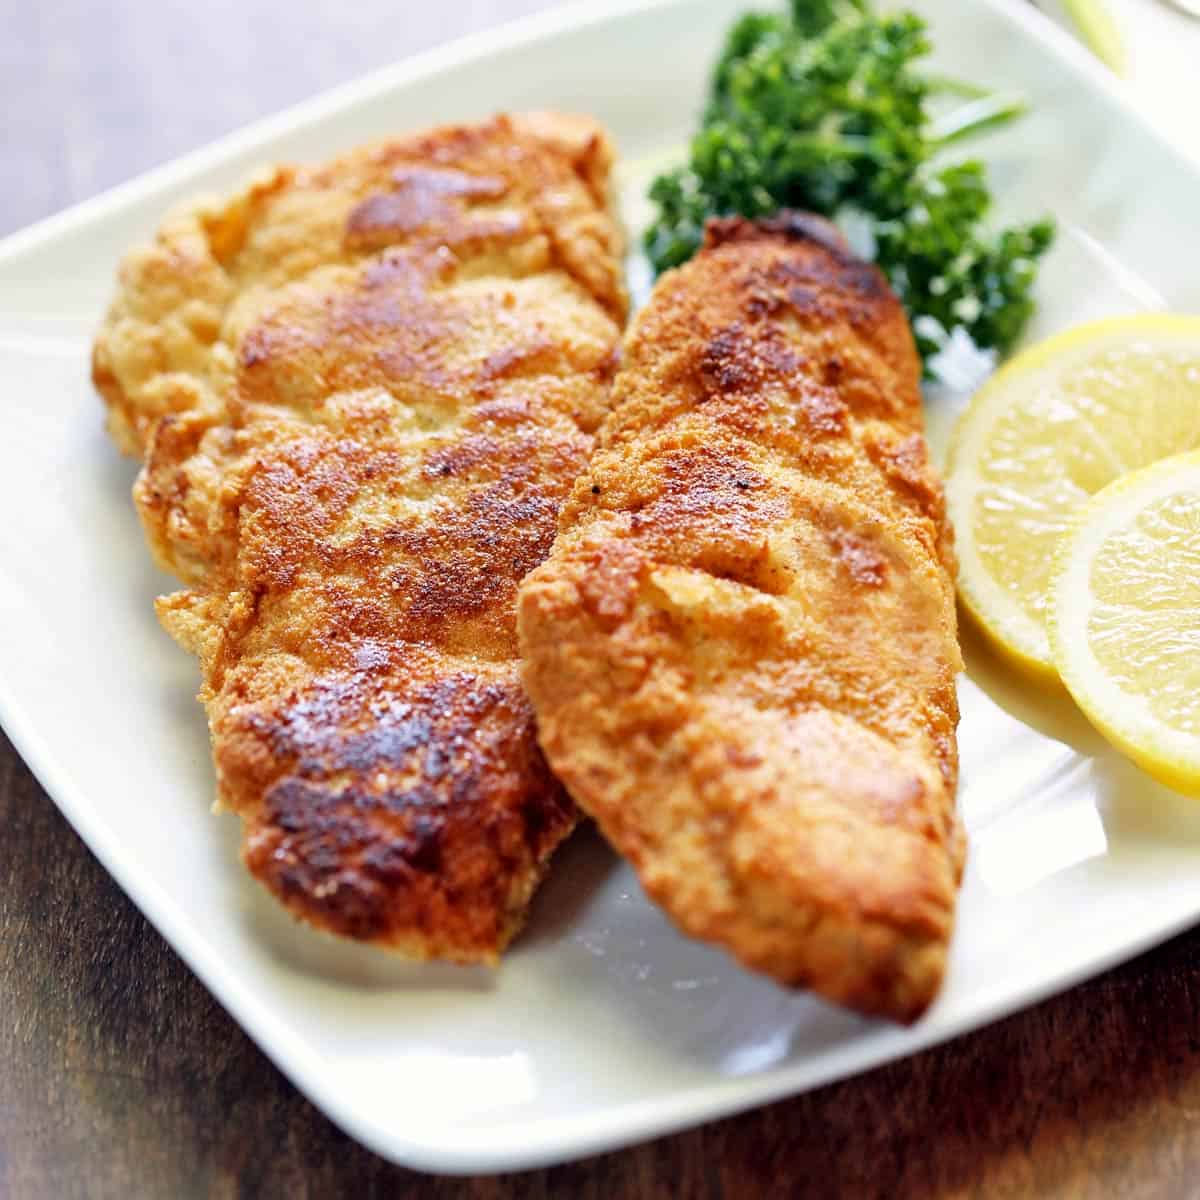 Pan-Fried Fish Almondine Recipe from H-E-B